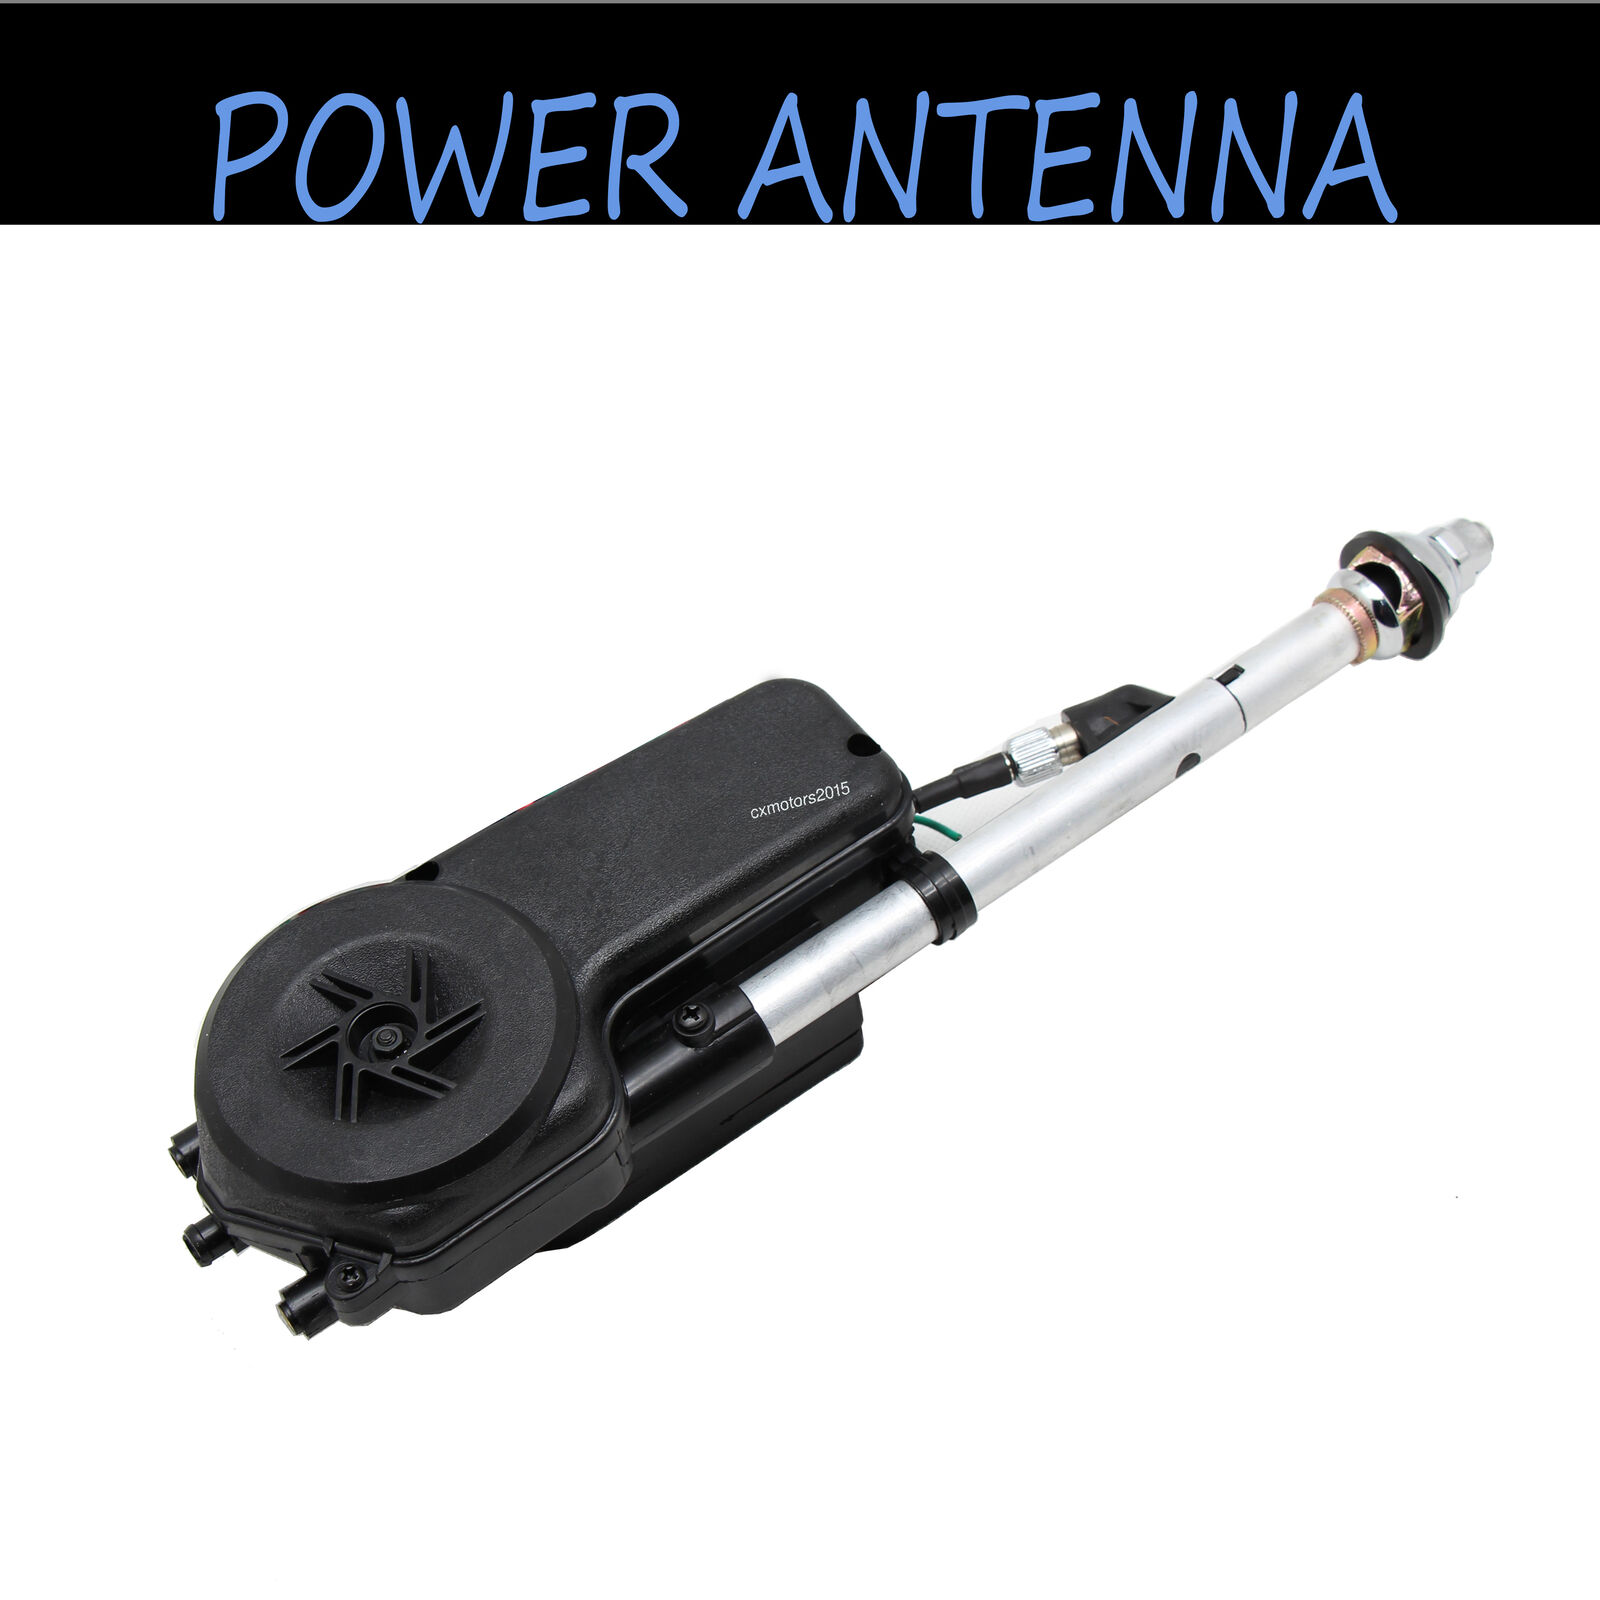 Power Antenna Mast Aerial kit fits Chevy Beretta Camaro Corvette S10 AM FM Radio